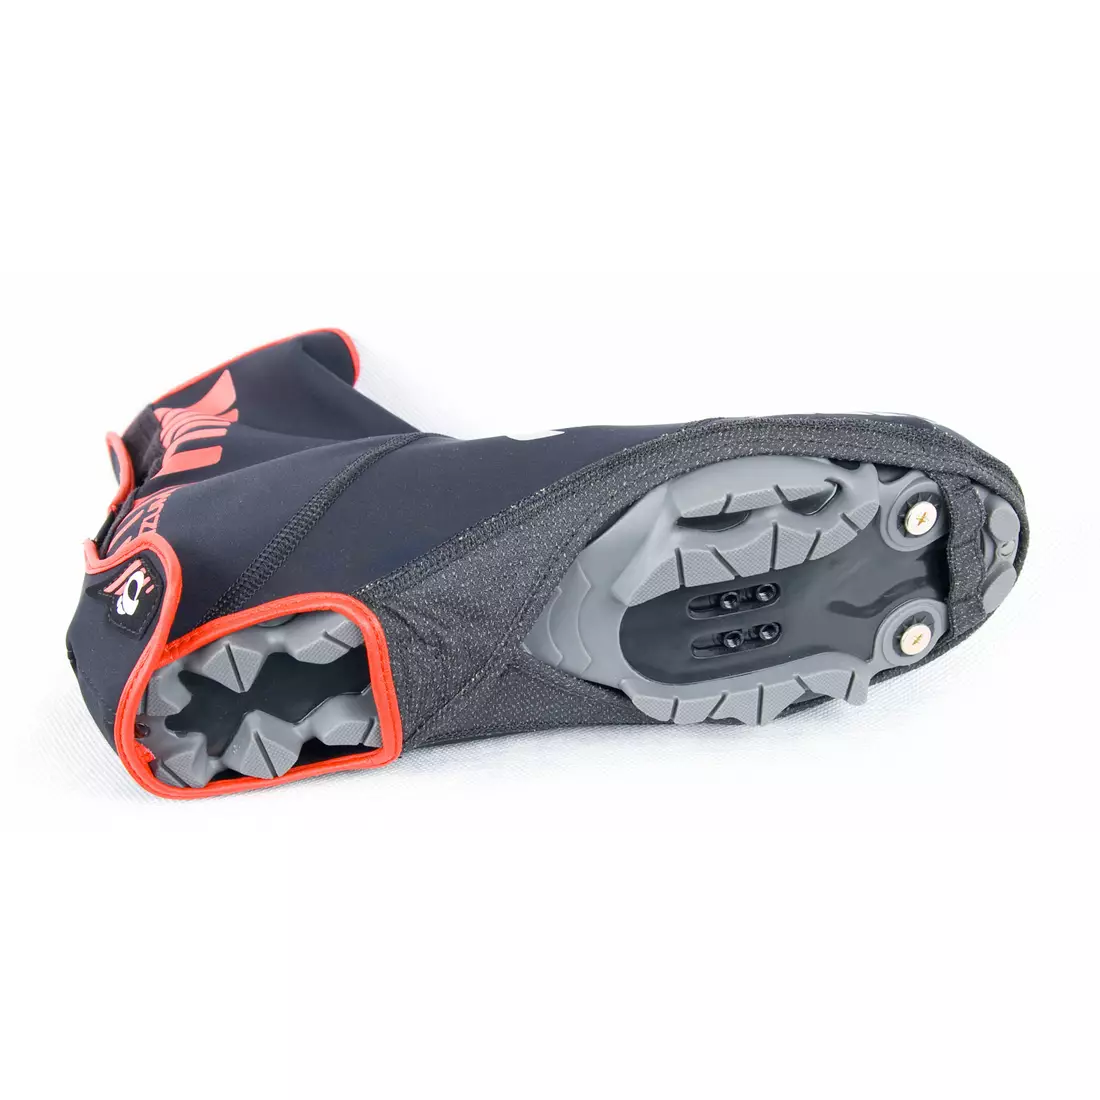 PEARL IZUMI ELITE softshell MTB protectors for cycling shoes 14381406-021